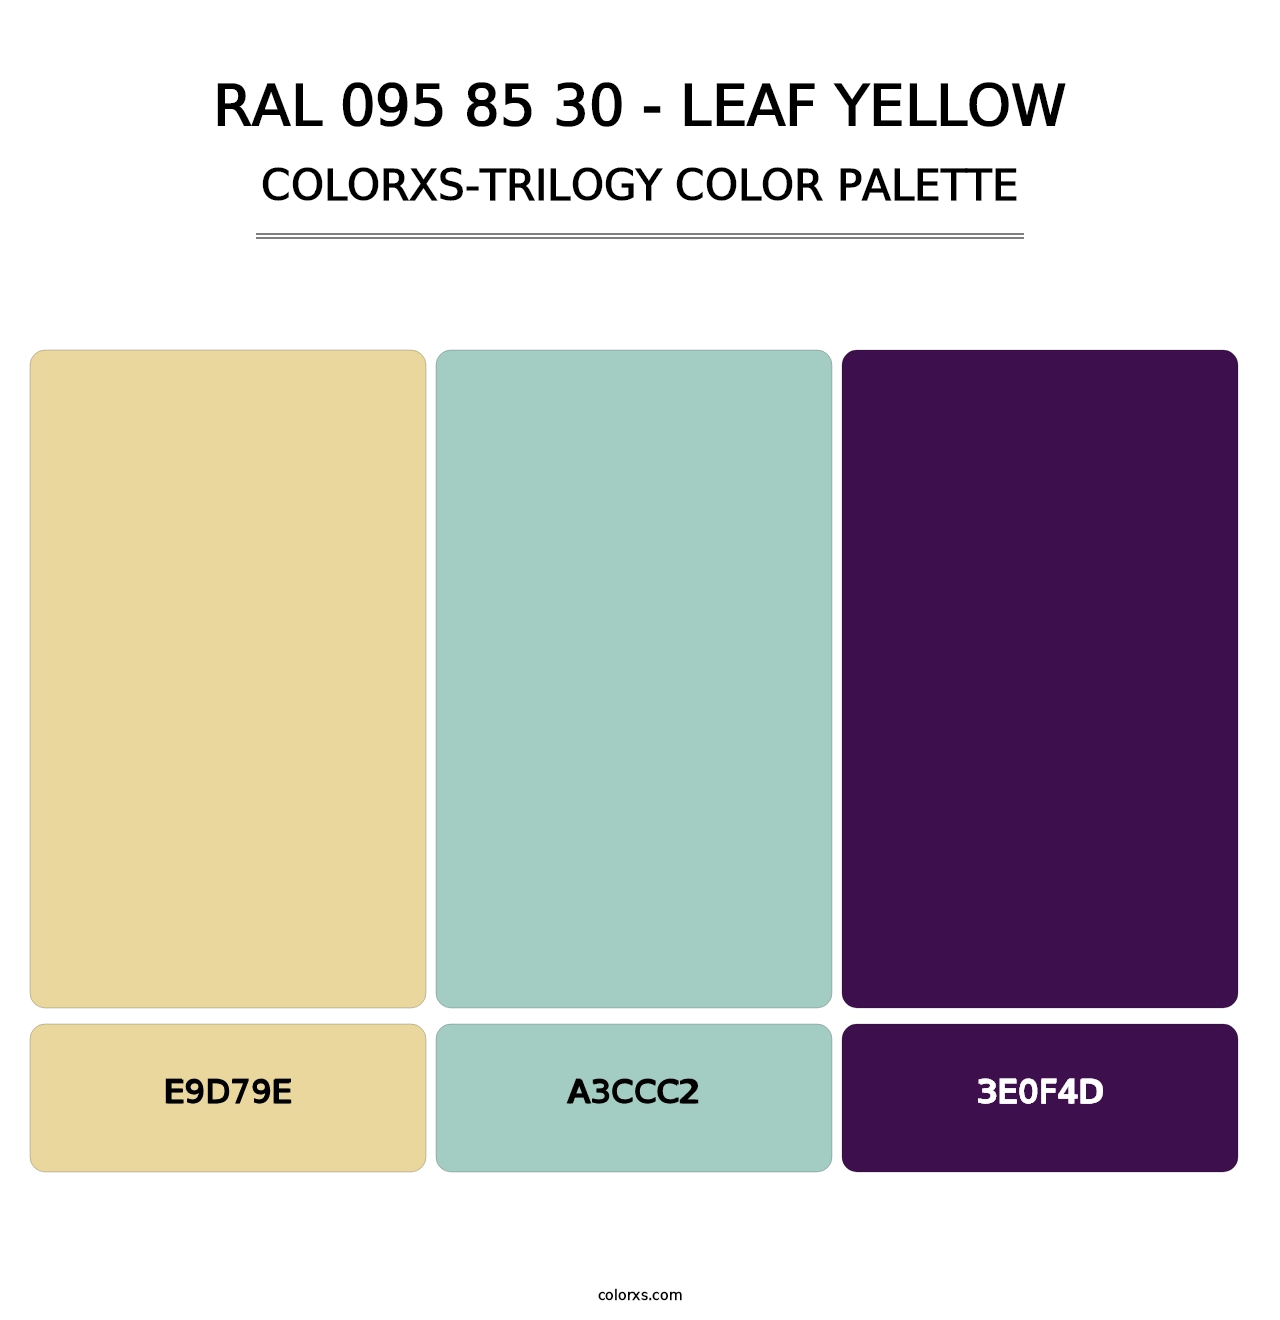 RAL 095 85 30 - Leaf Yellow - Colorxs Trilogy Palette